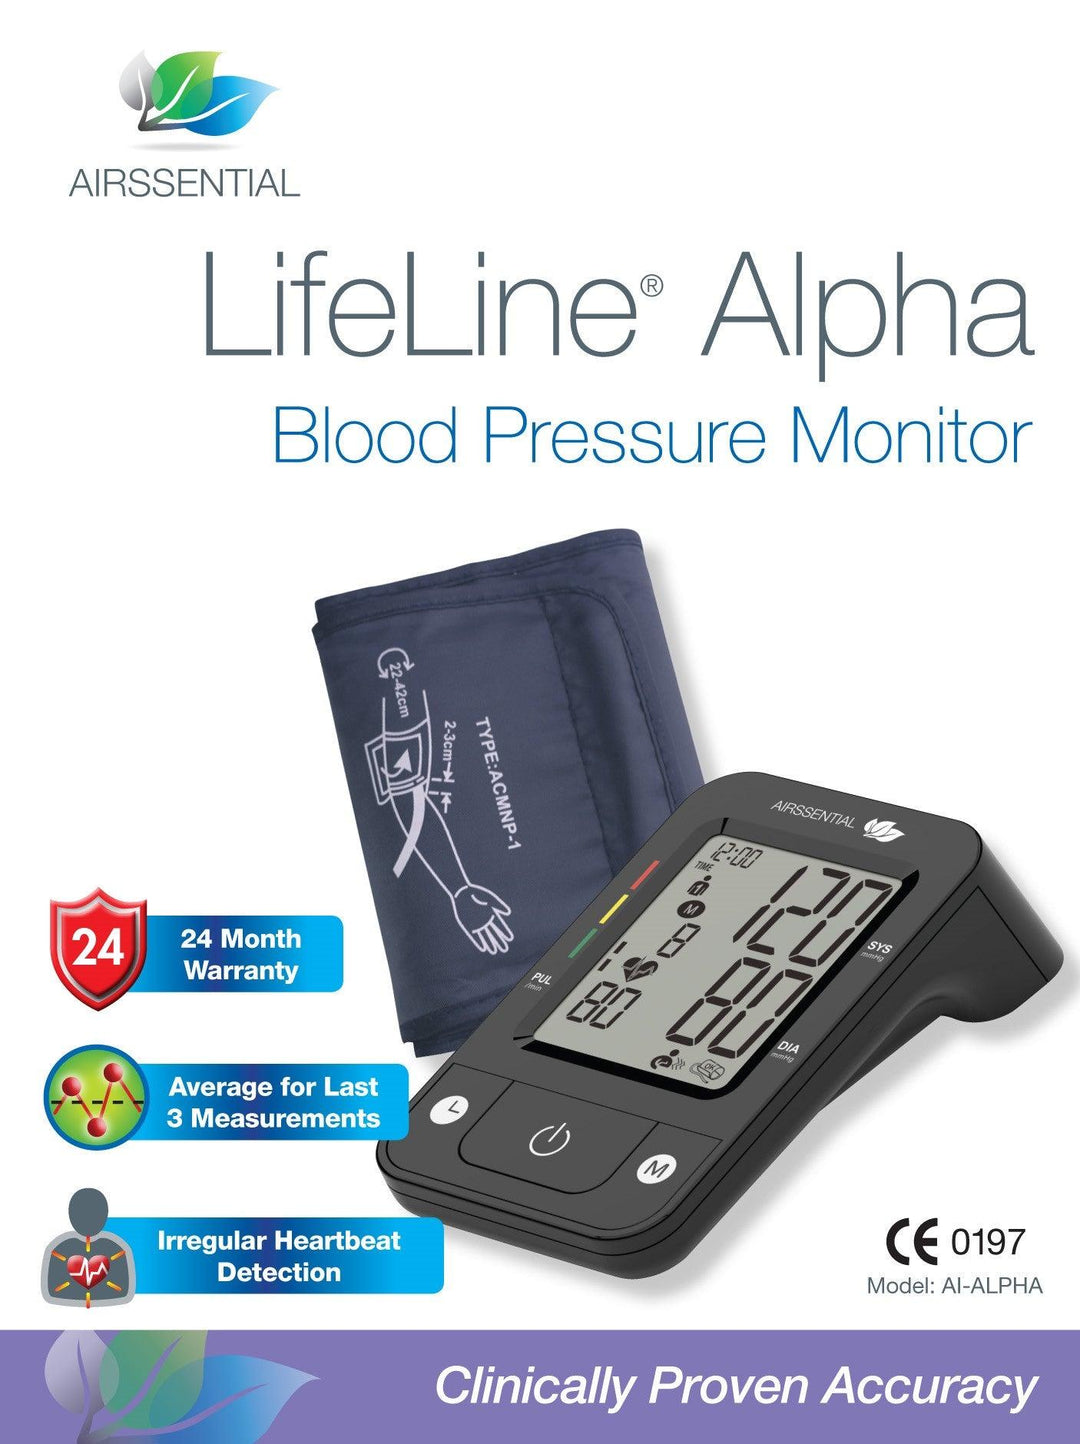 LifeLine Alpha Blood Pressure Monitor - Airssential Health Care